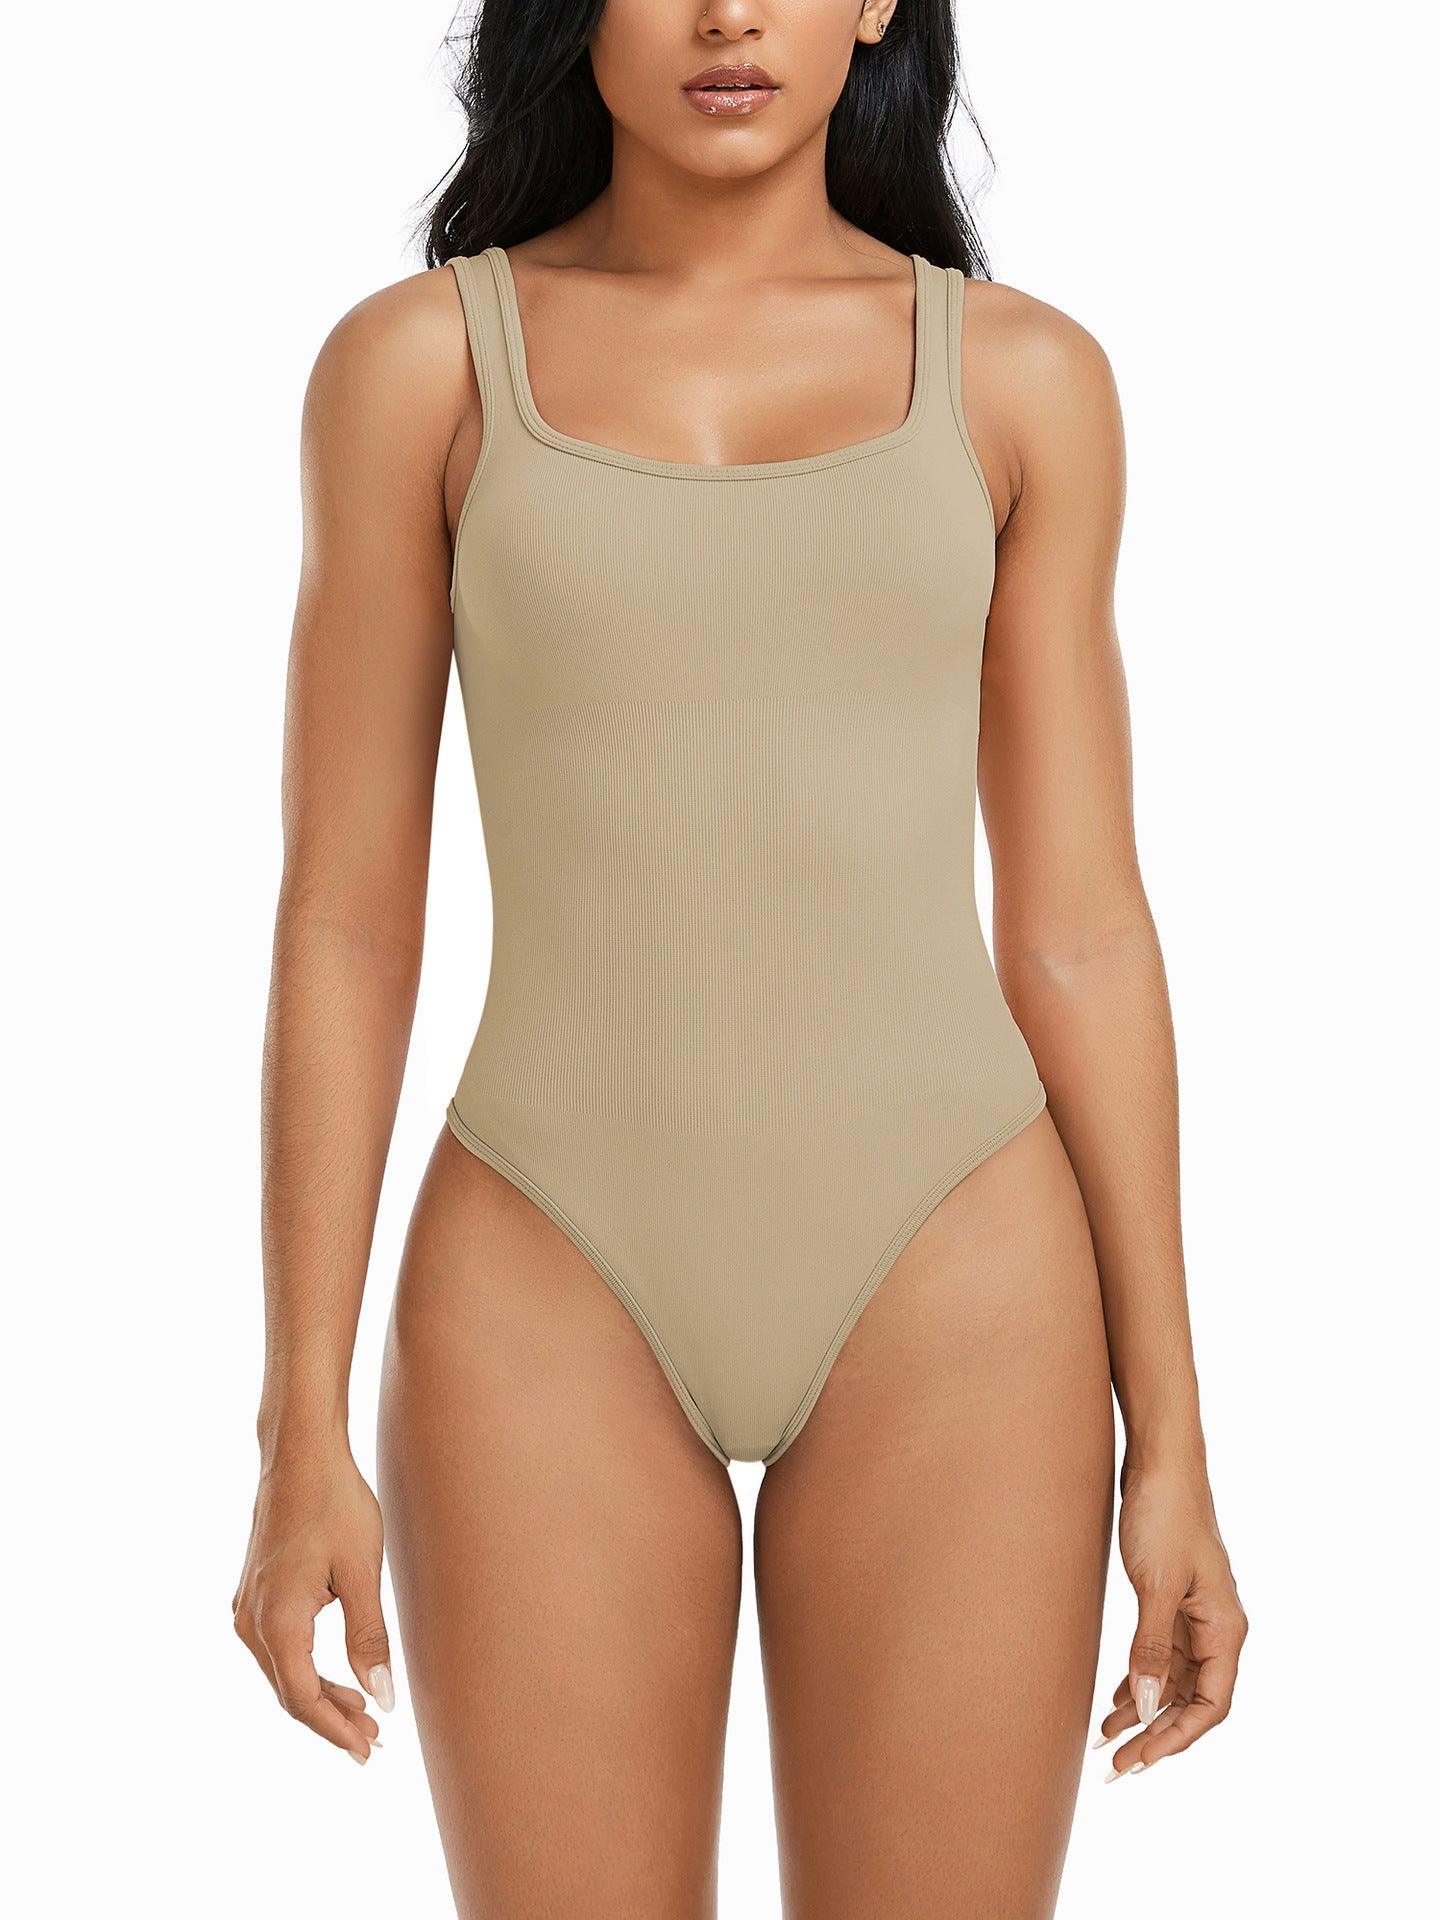 a woman in a tan bodysuit